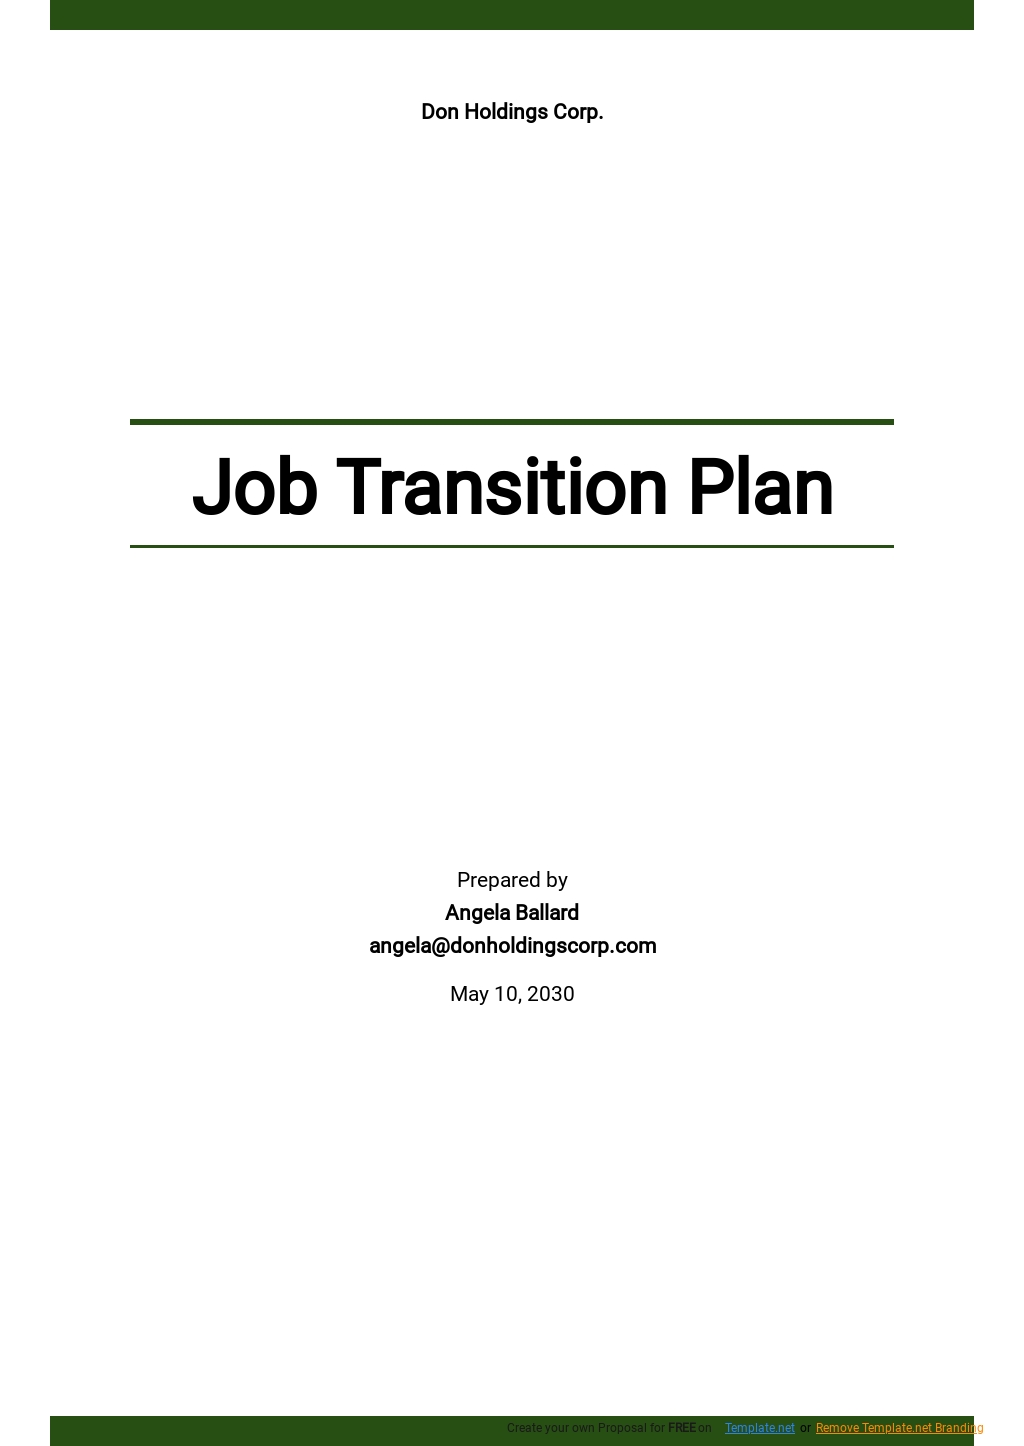 Sample Job Transition Plan Template